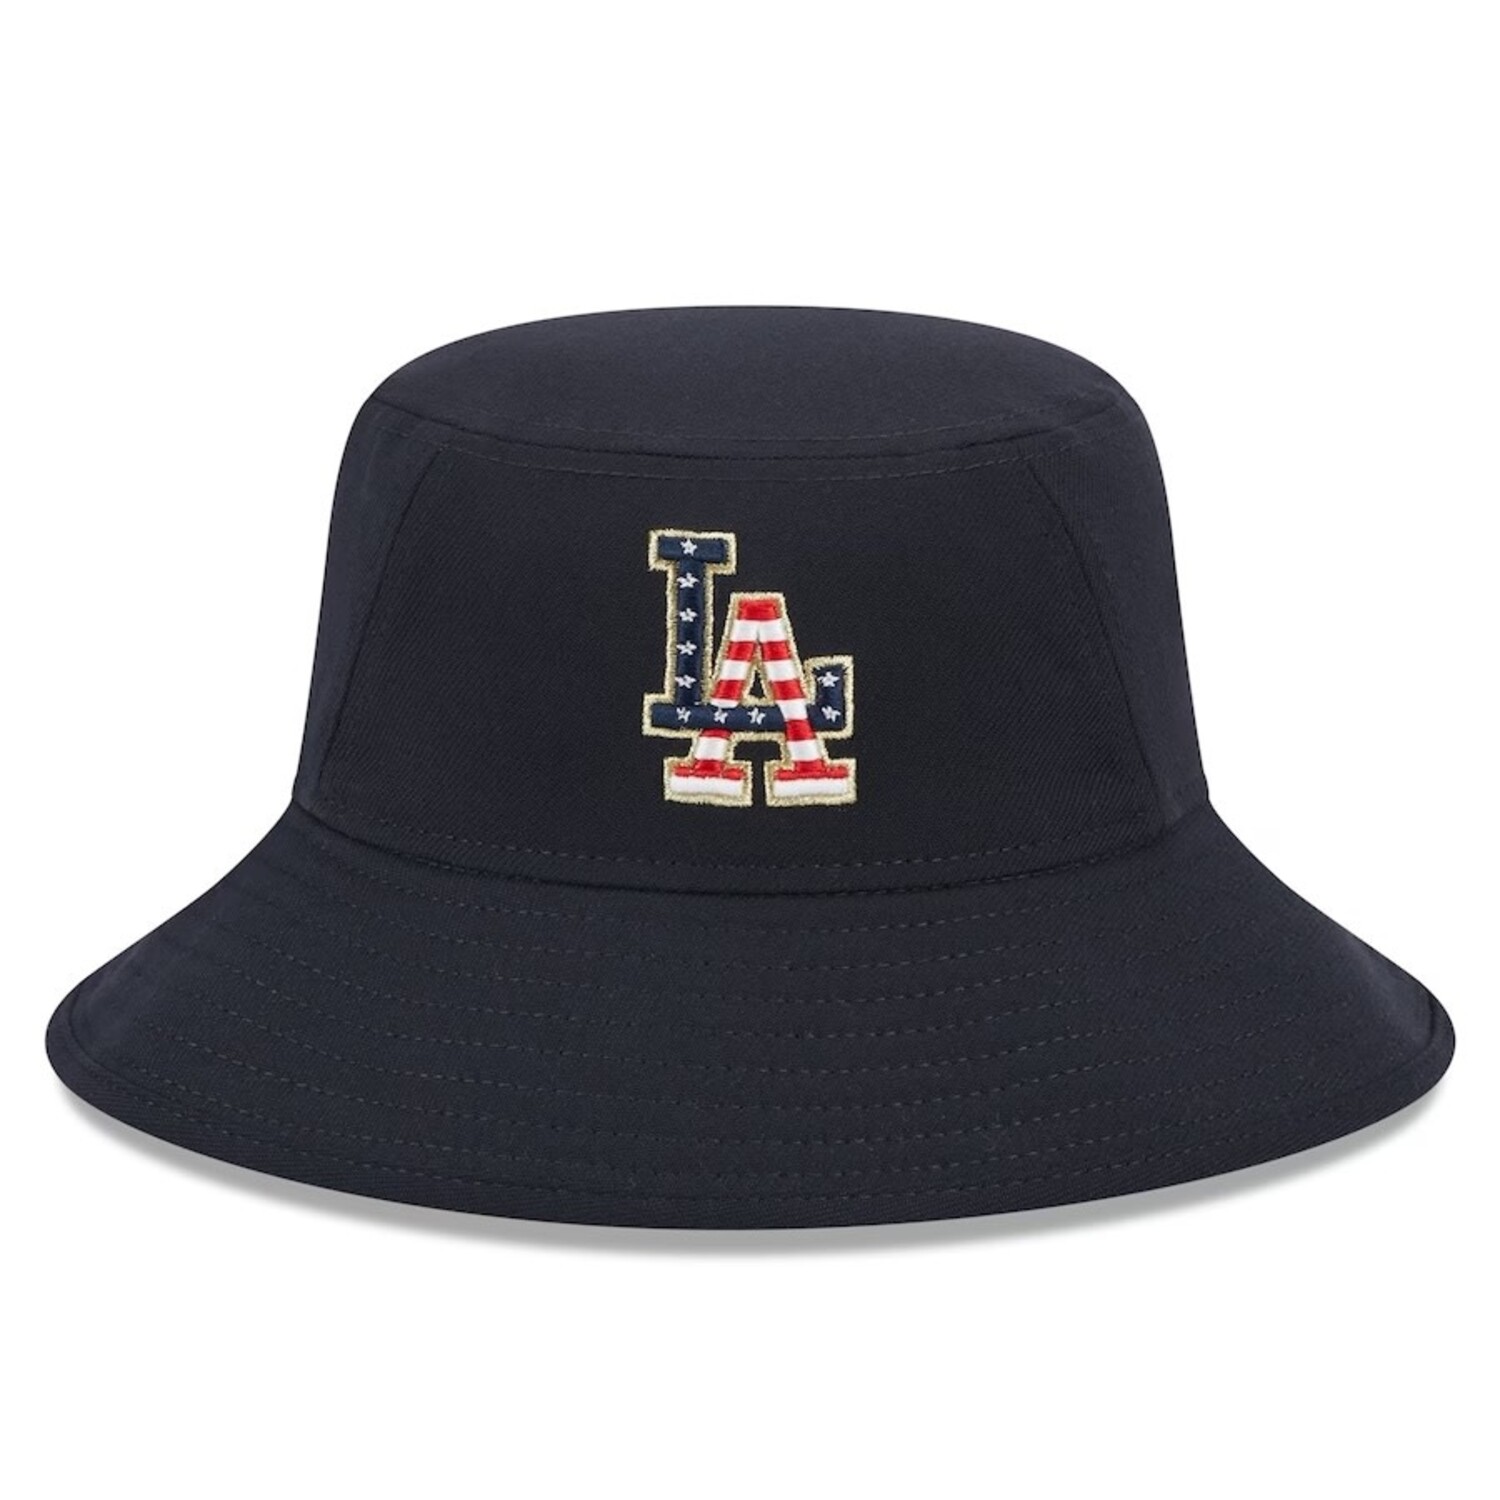 Official LA Dodgers New Era Bucket Hat